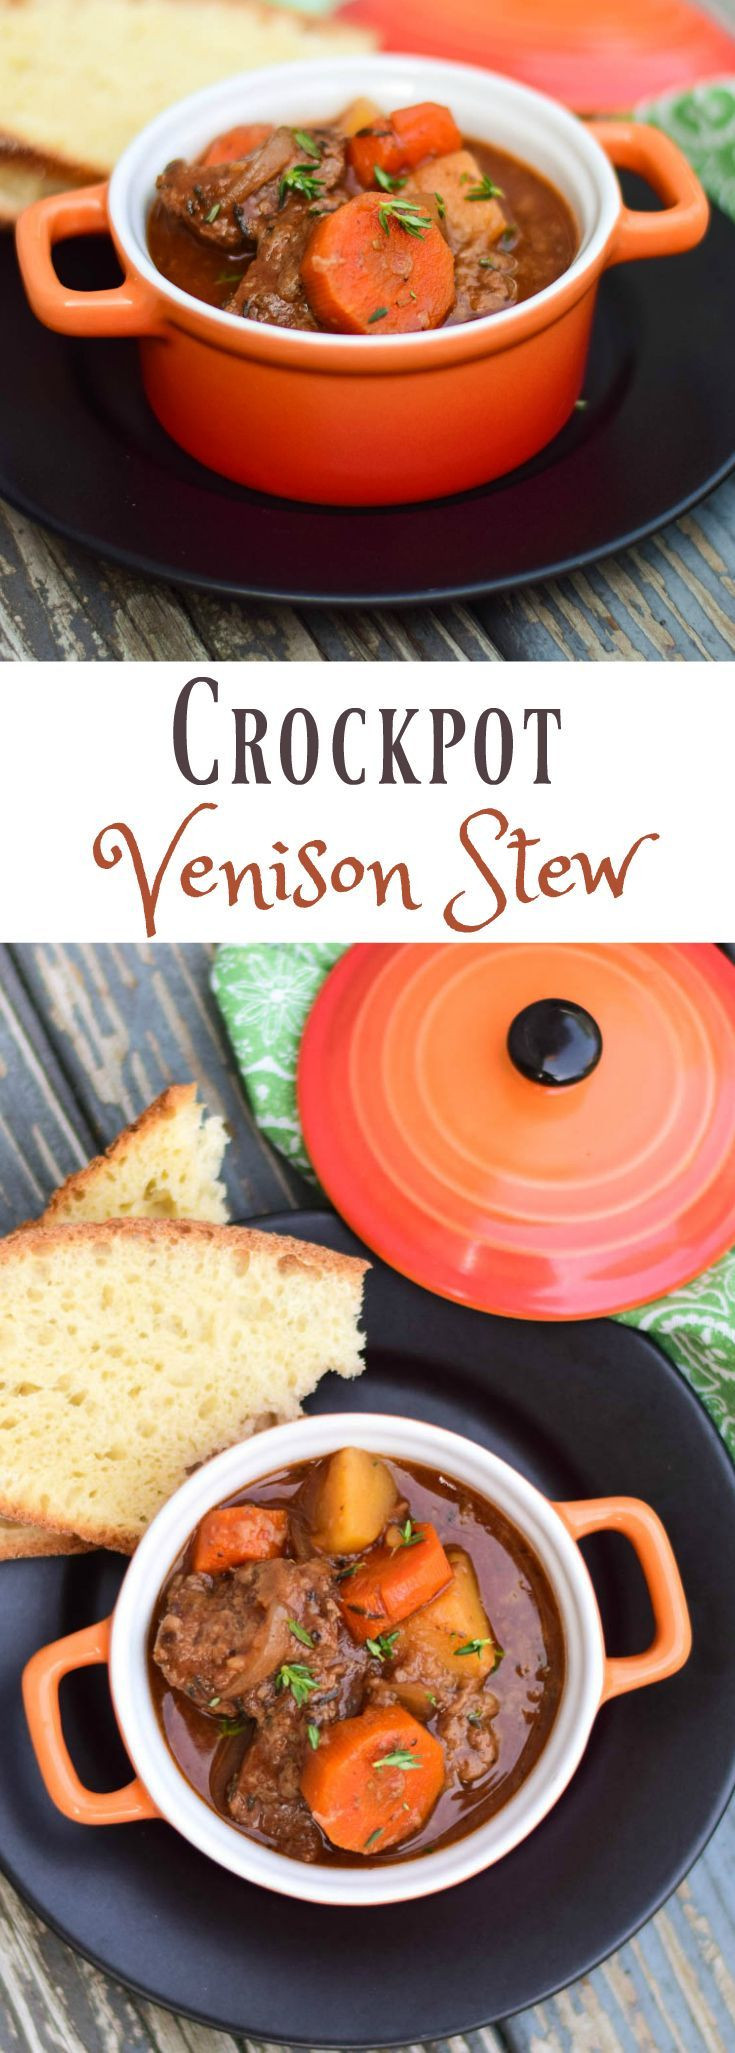 Venison Stew Slow Cooker
 Best 25 Venison stew ideas on Pinterest